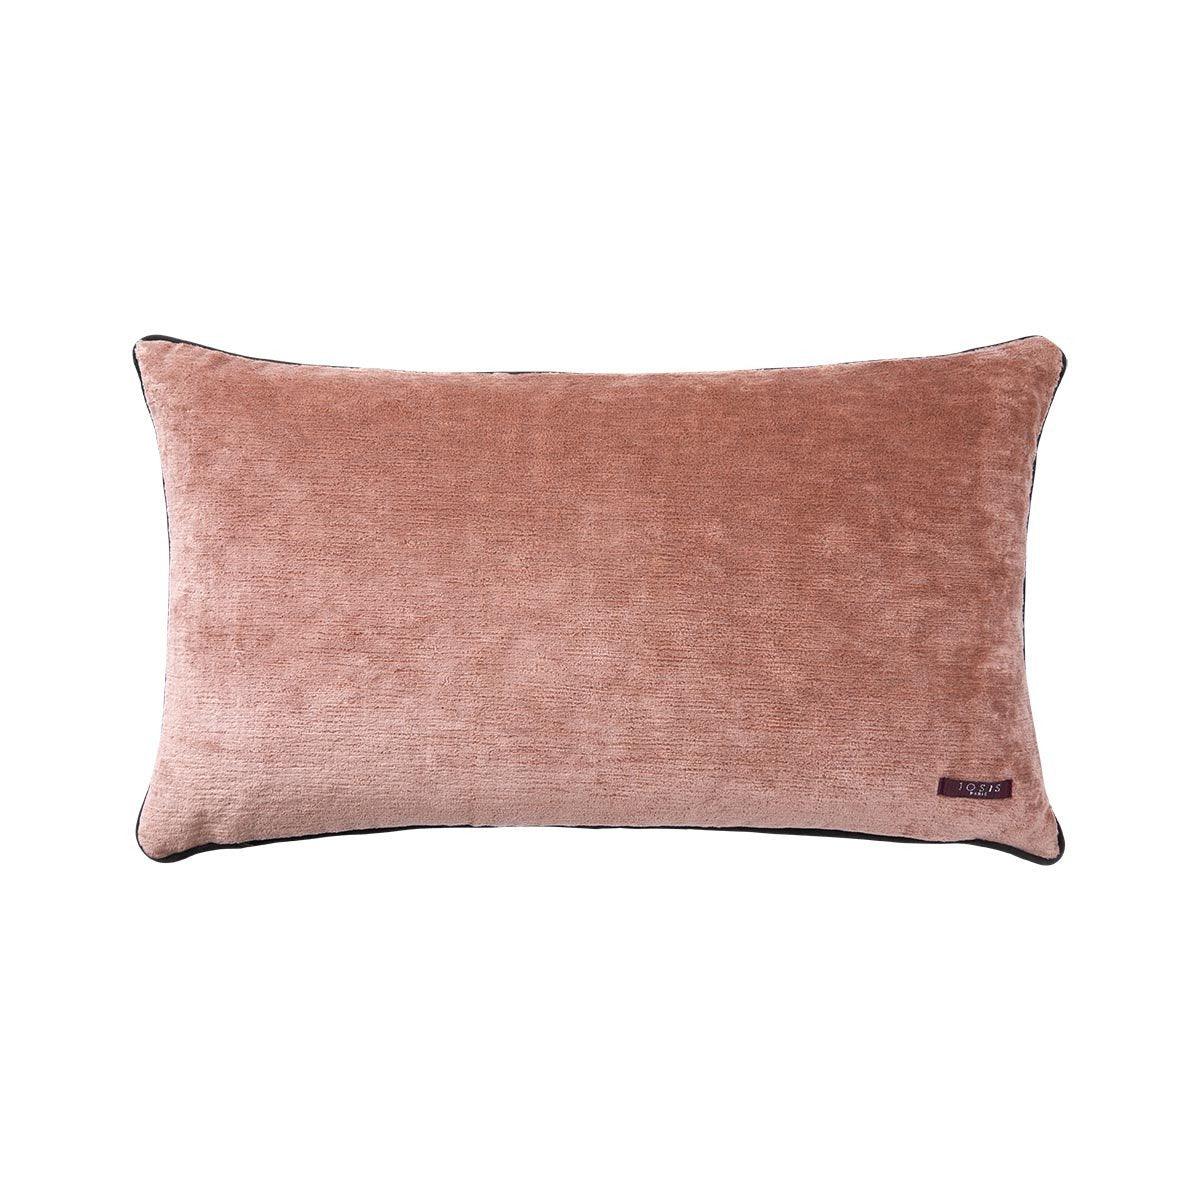 Fig Linens - Boromee Cedre Lumbar Pillow by Iosis - Linen back